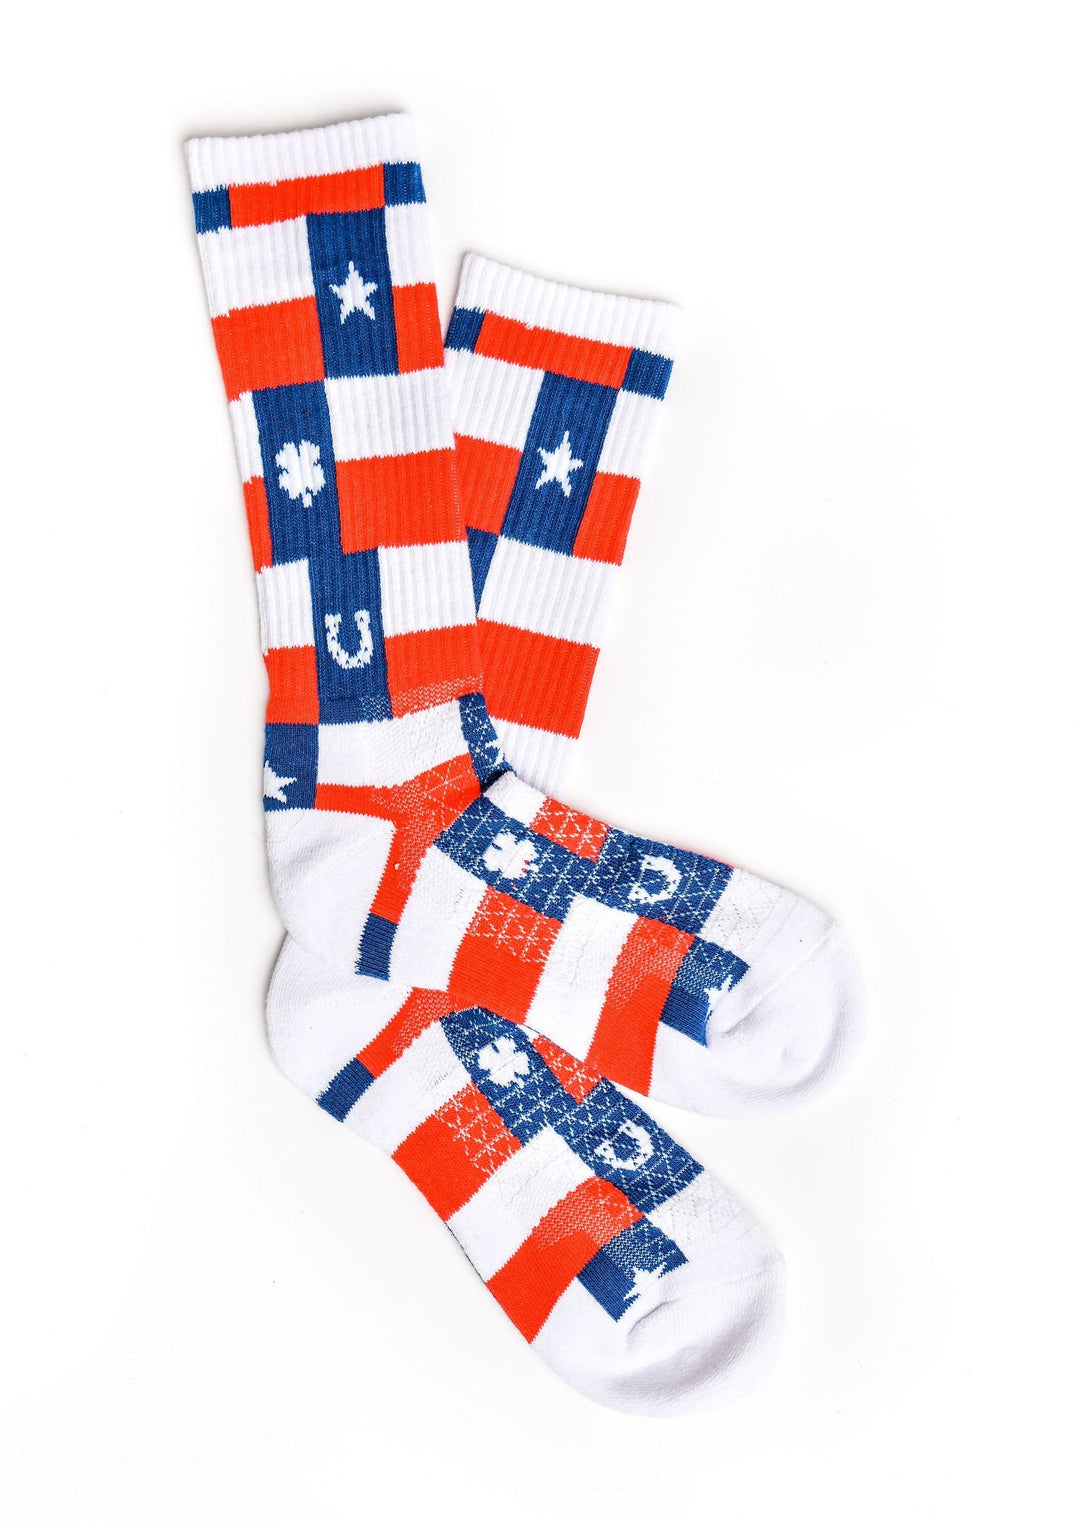 Lucky America Performance Socks Women's Mid-Calf Socks  Western Fashion by Lane